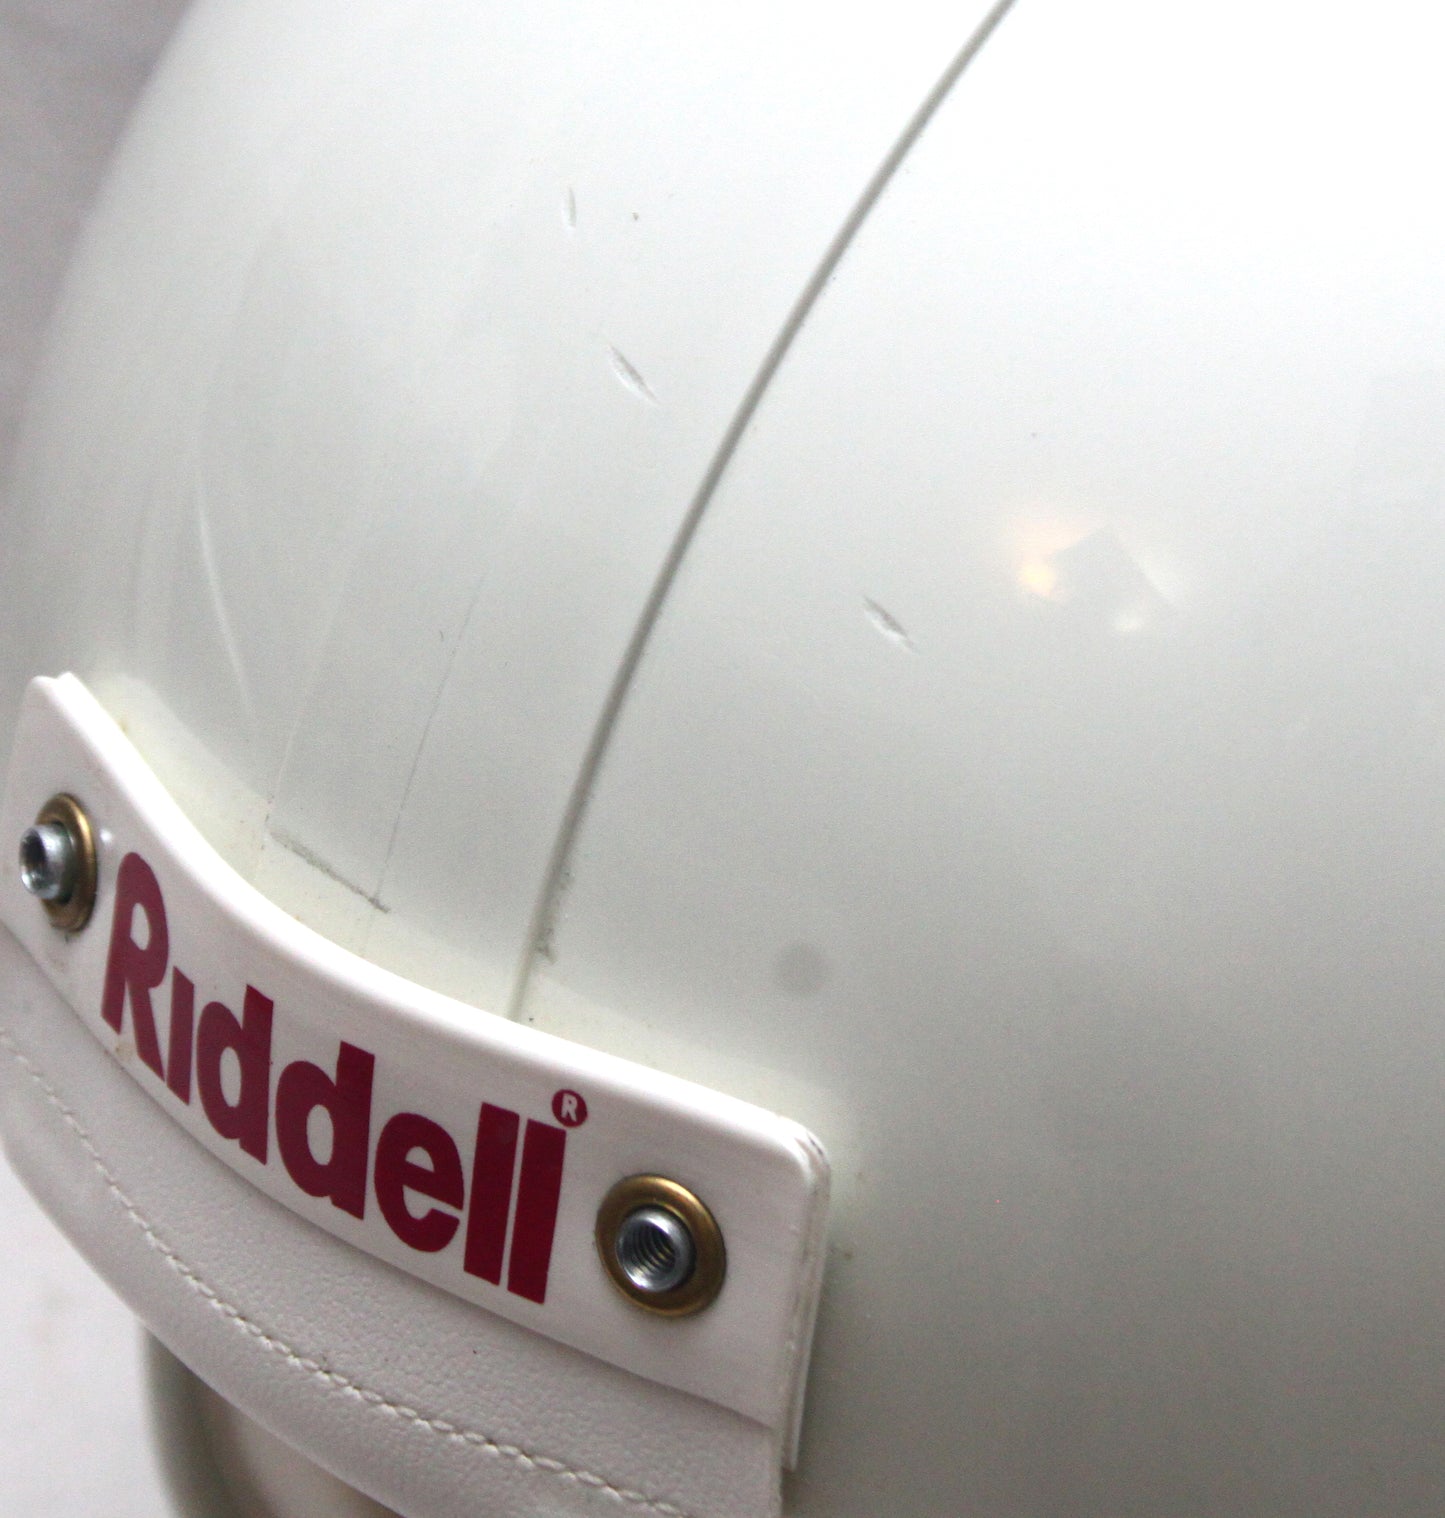 Rare NOS Tom Brady Style Riddell VSR4 XL Football Helmet with Small Ear Hole